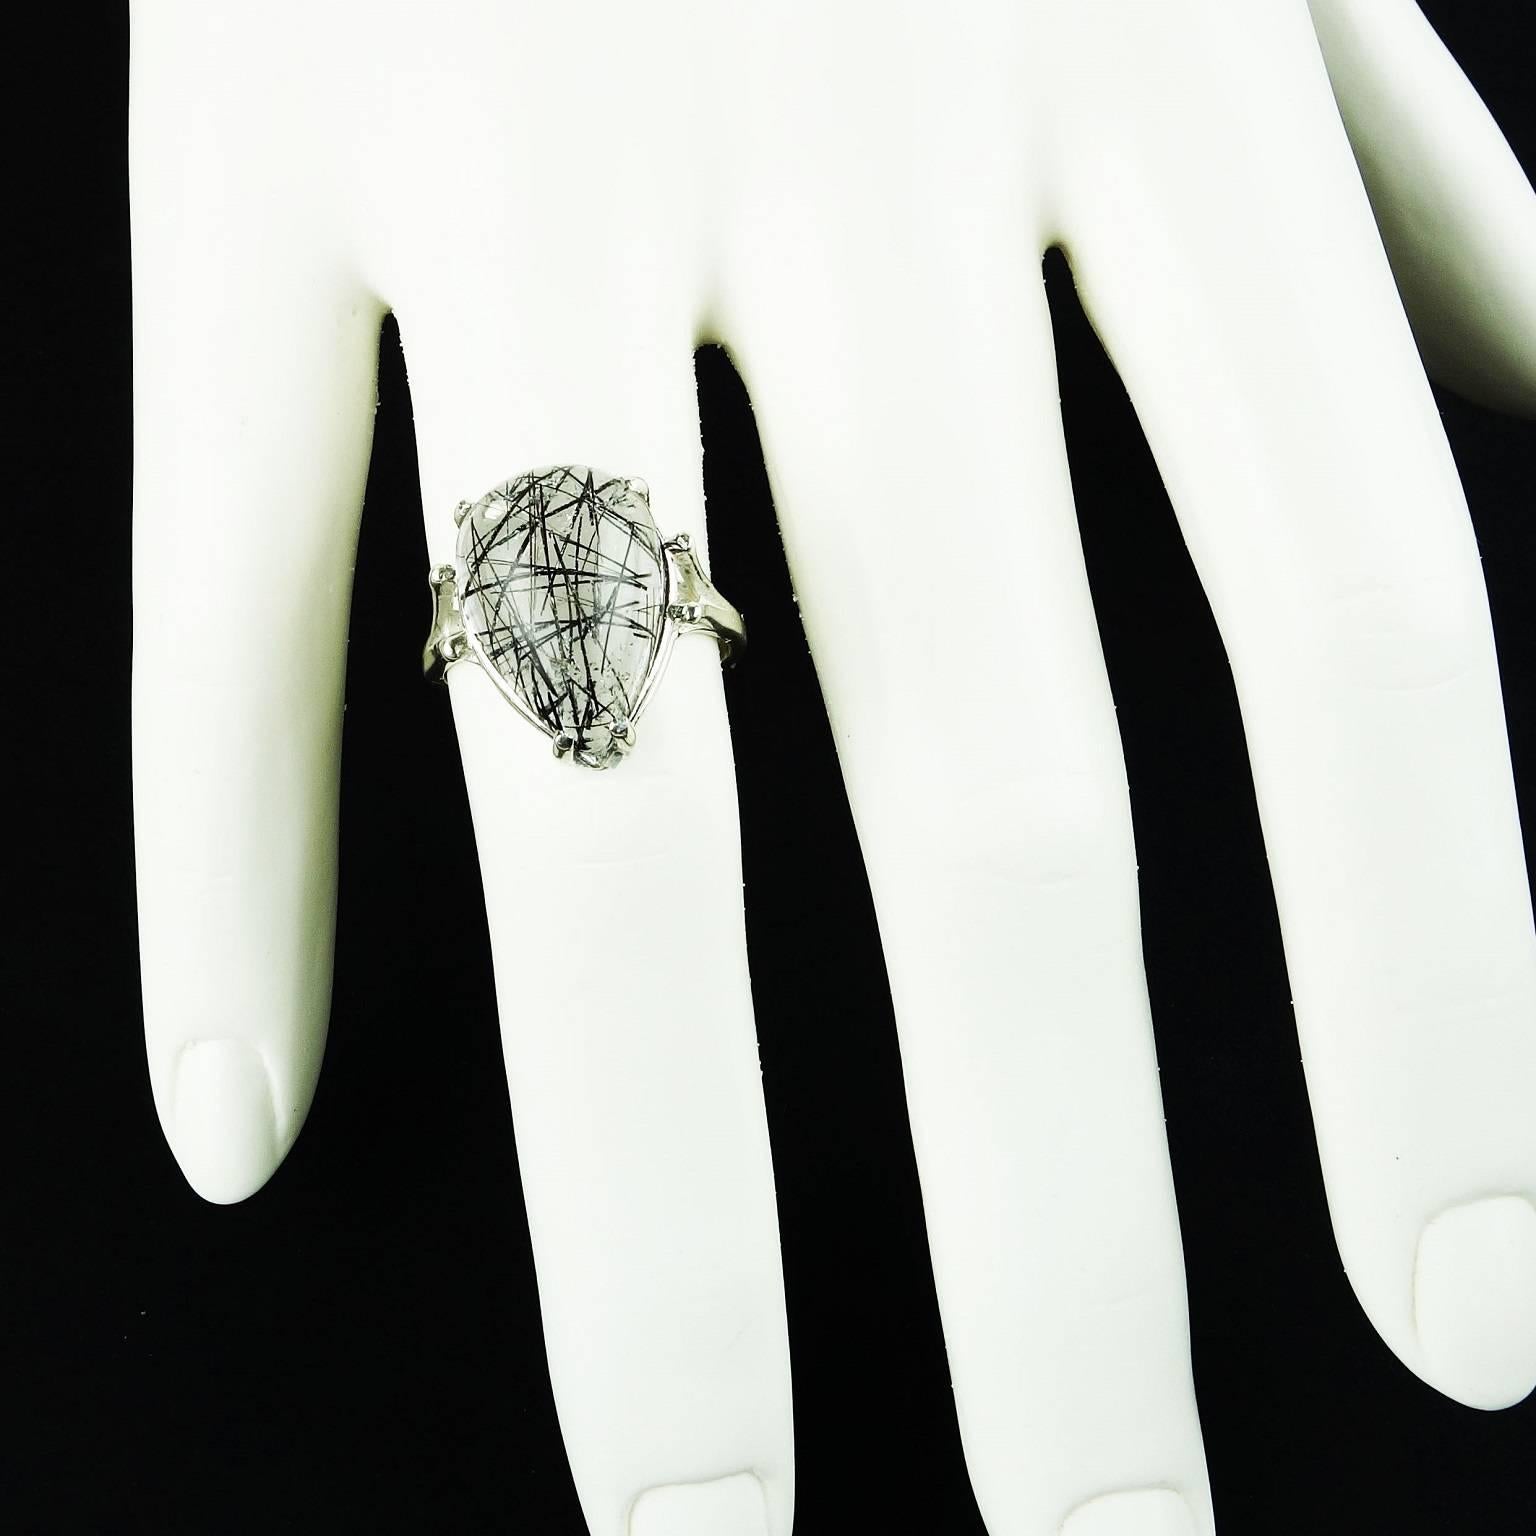 black tourmaline quartz engagement ring